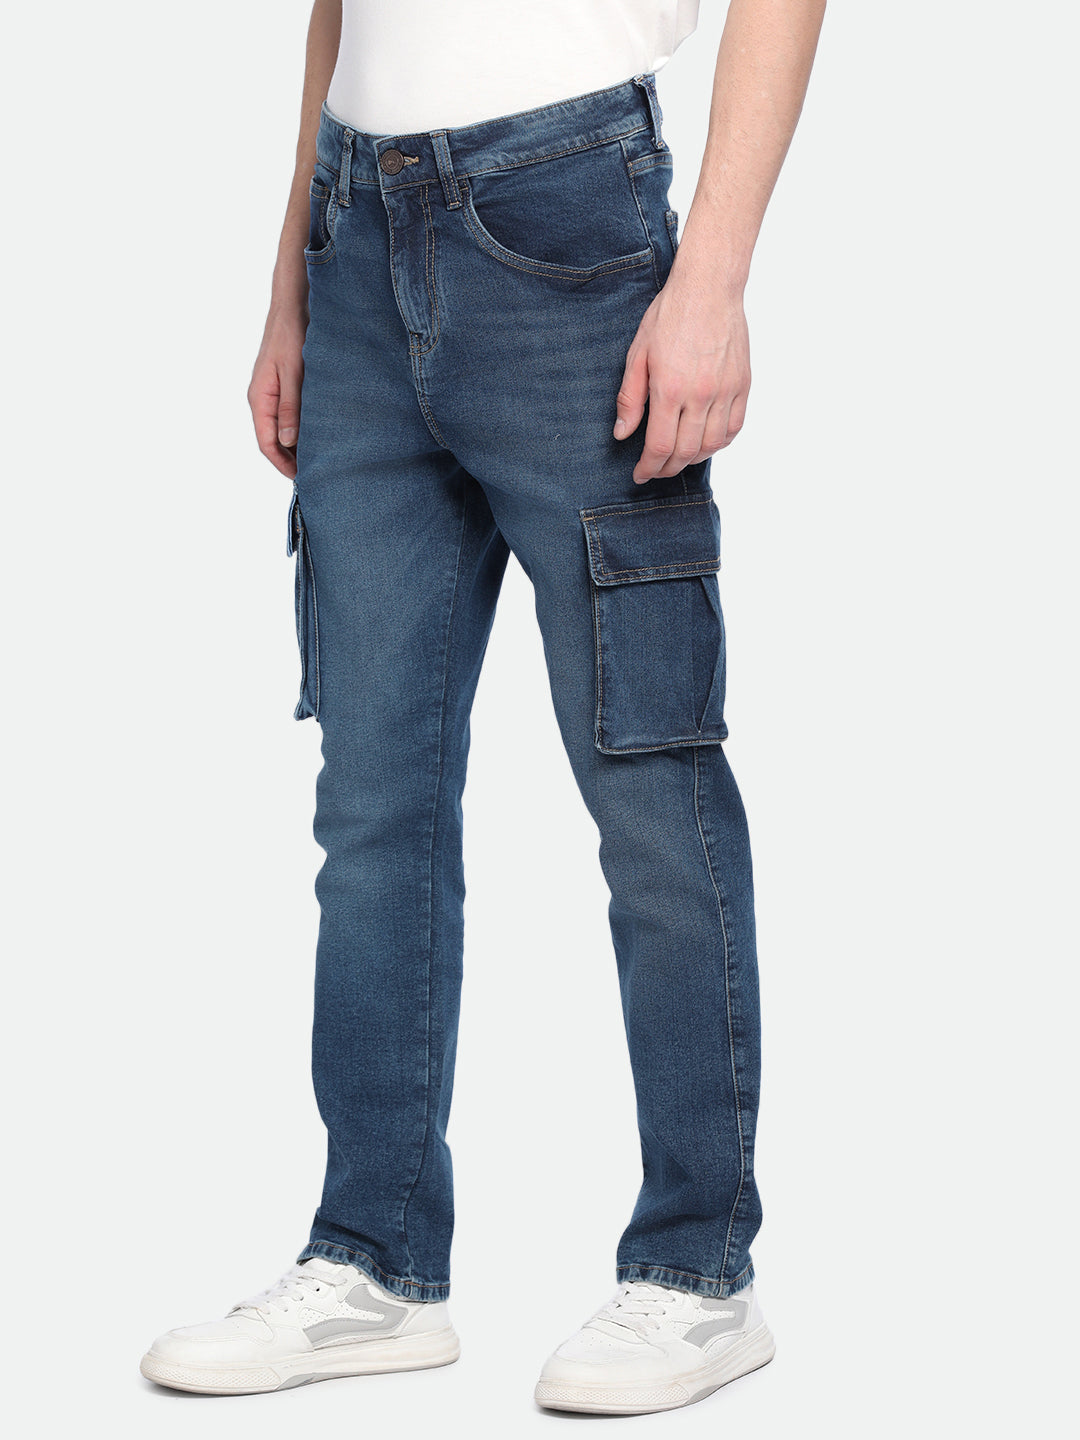 Dennis Lingo Mens's MID Blue Solid Jeans